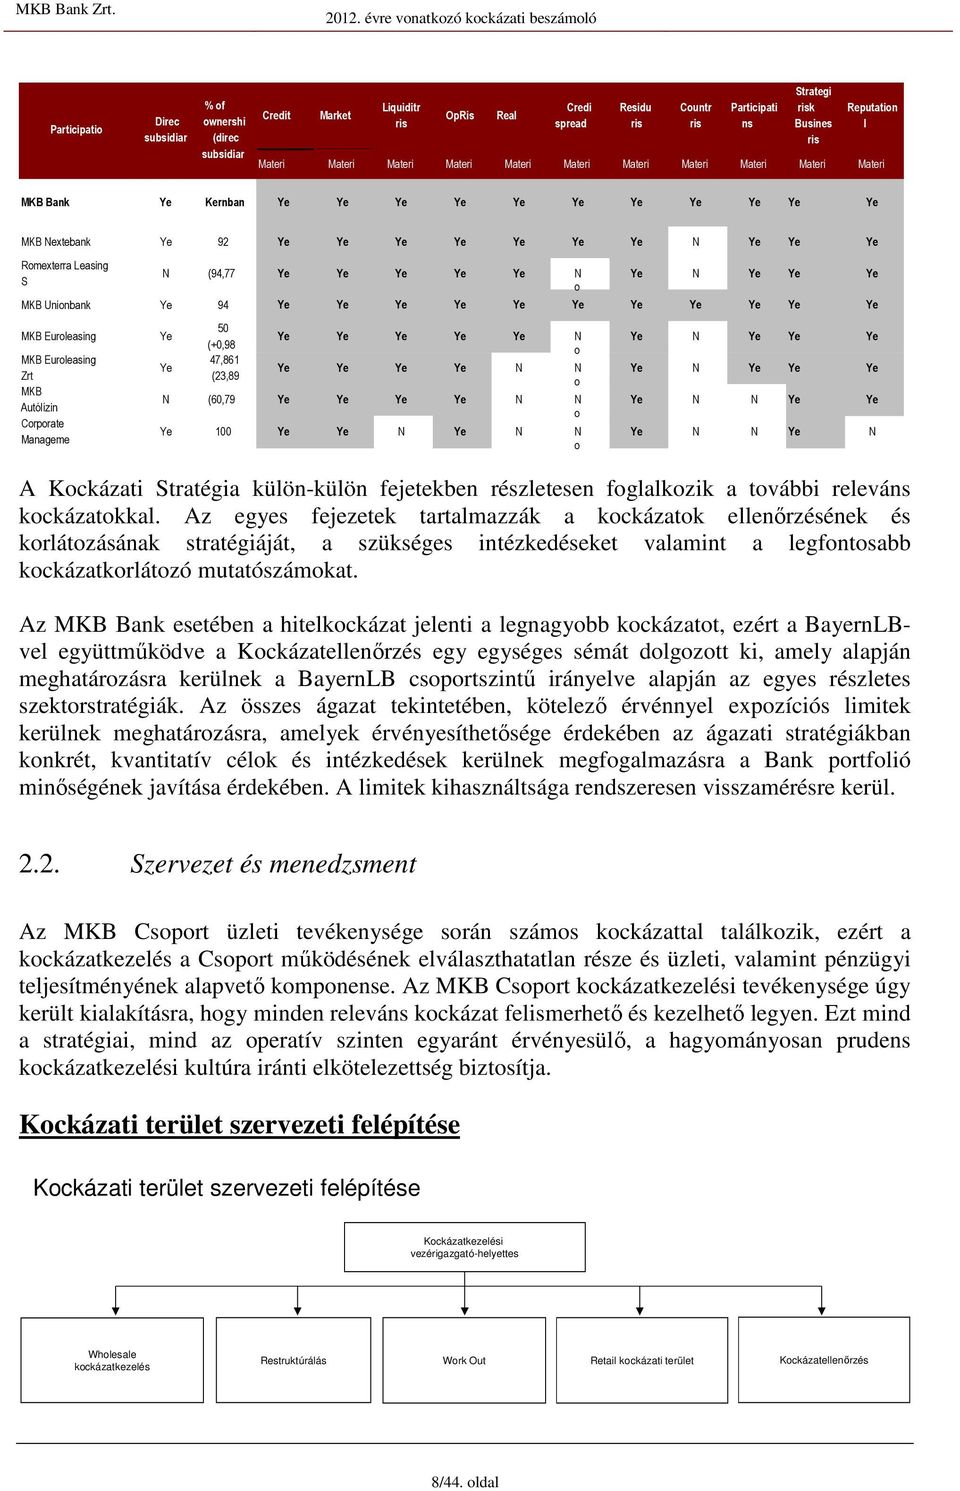 Zrt Kernban k MKB Nextebank 92 Romexterra Leaing IFN N (94,77 S o %) A MKB Unionbank 94 AD % 50 MKB Euroleaing Zrt. (+0,98 MKB Euroleaing %) 47,861 Autóhitel Zrt + (23,89.